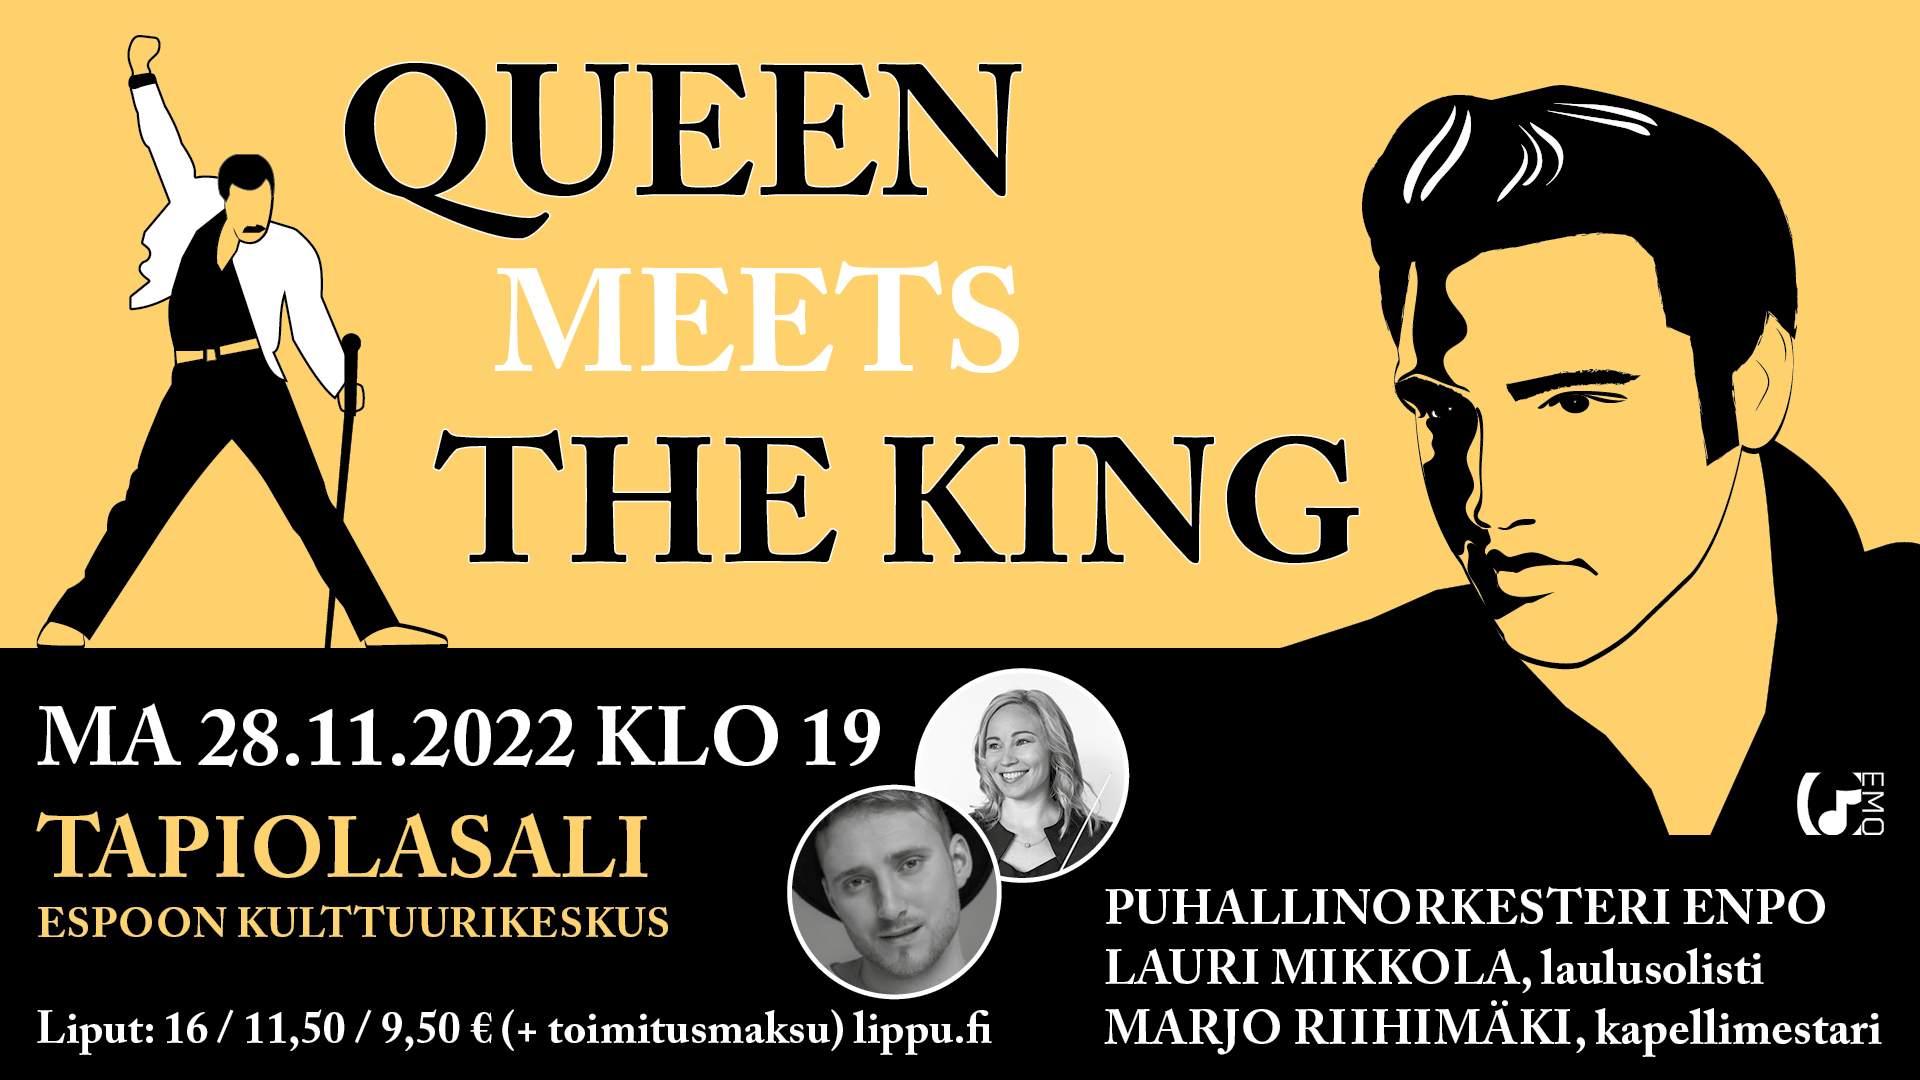 Queen Meets The King -konsertti.